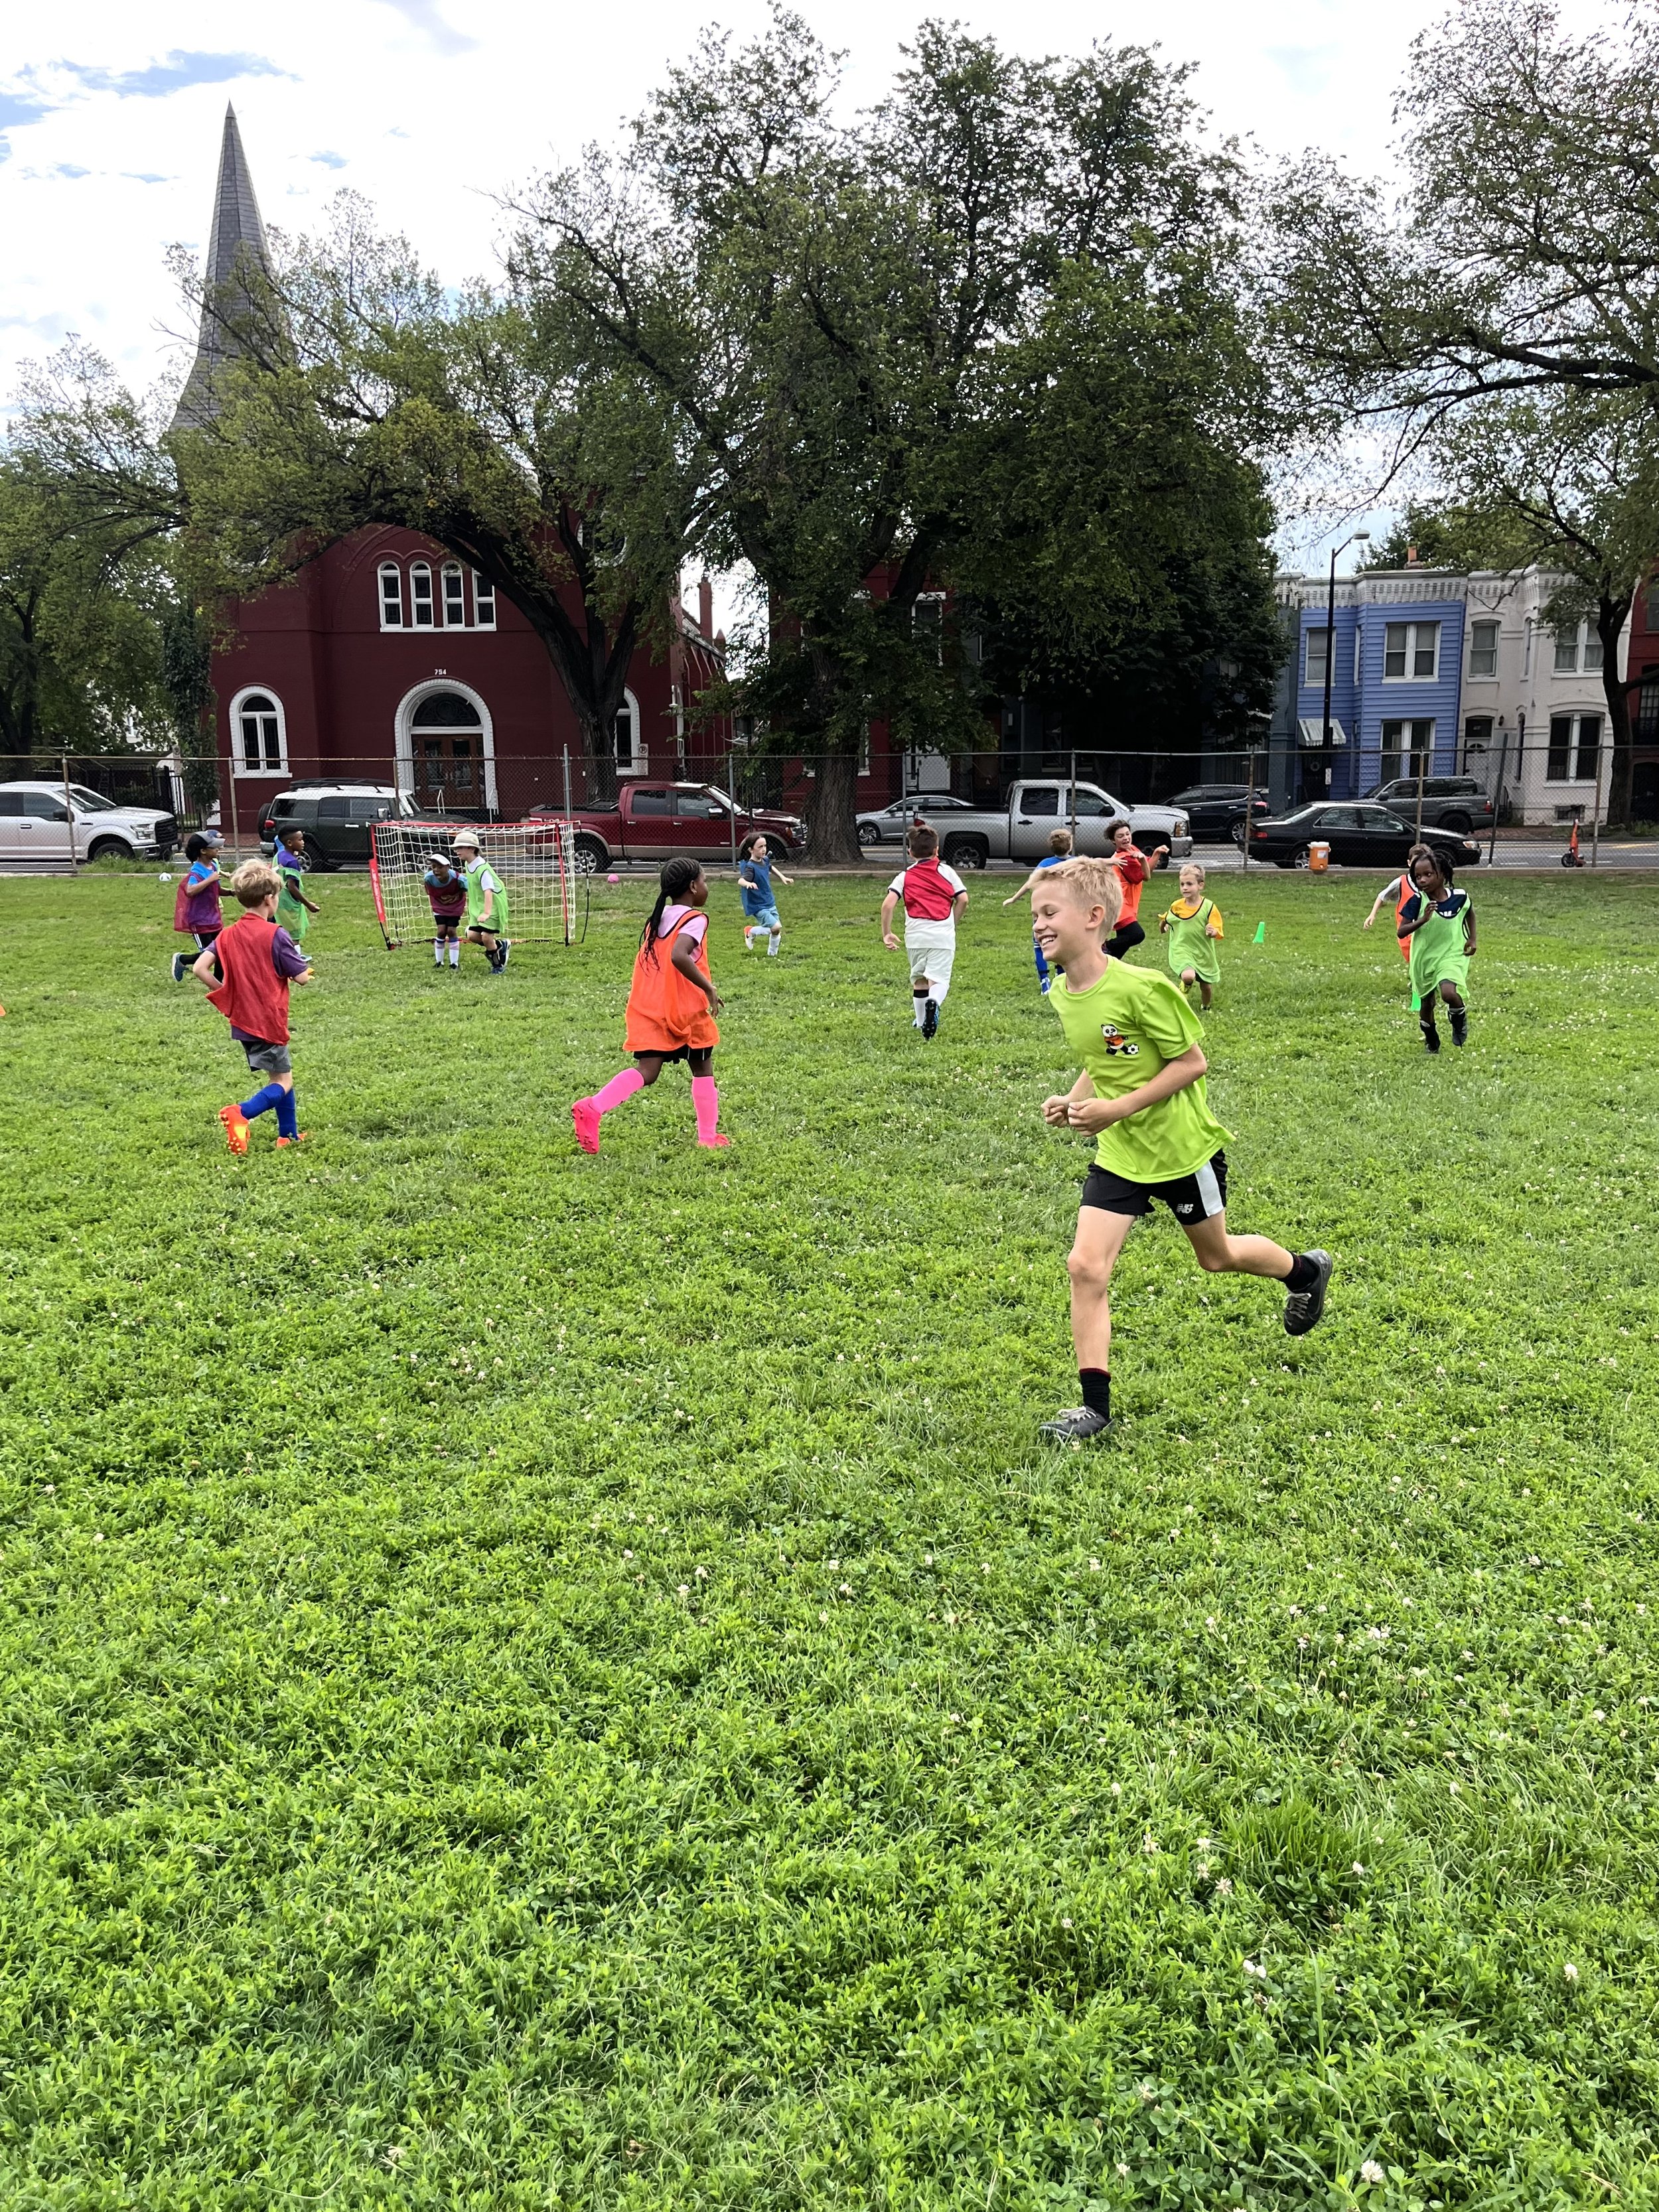 Dc-way-soccer-club-for-kids-in-washington-dc-summer-camp-at-tyler-elementary-school- 8427.jpeg